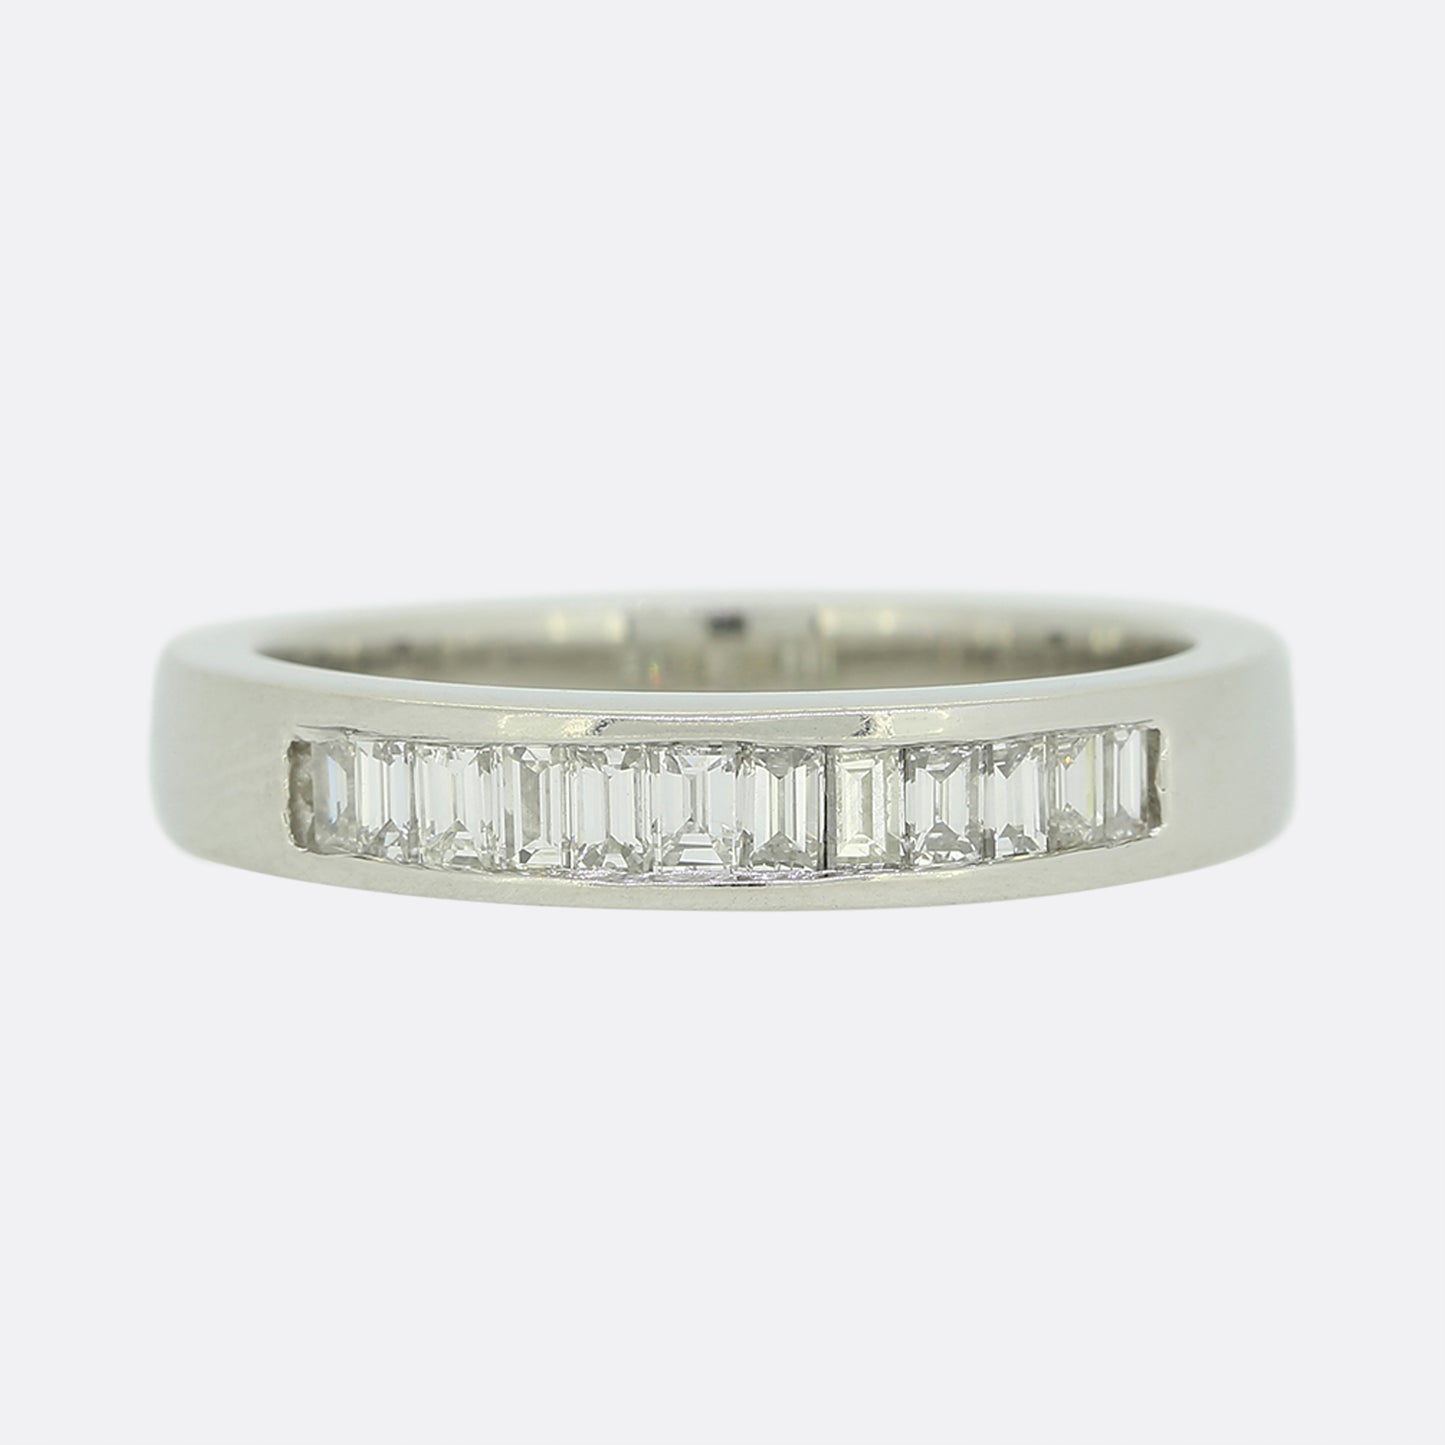 0.32 Carat Baguette Cut Diamond Band Ring